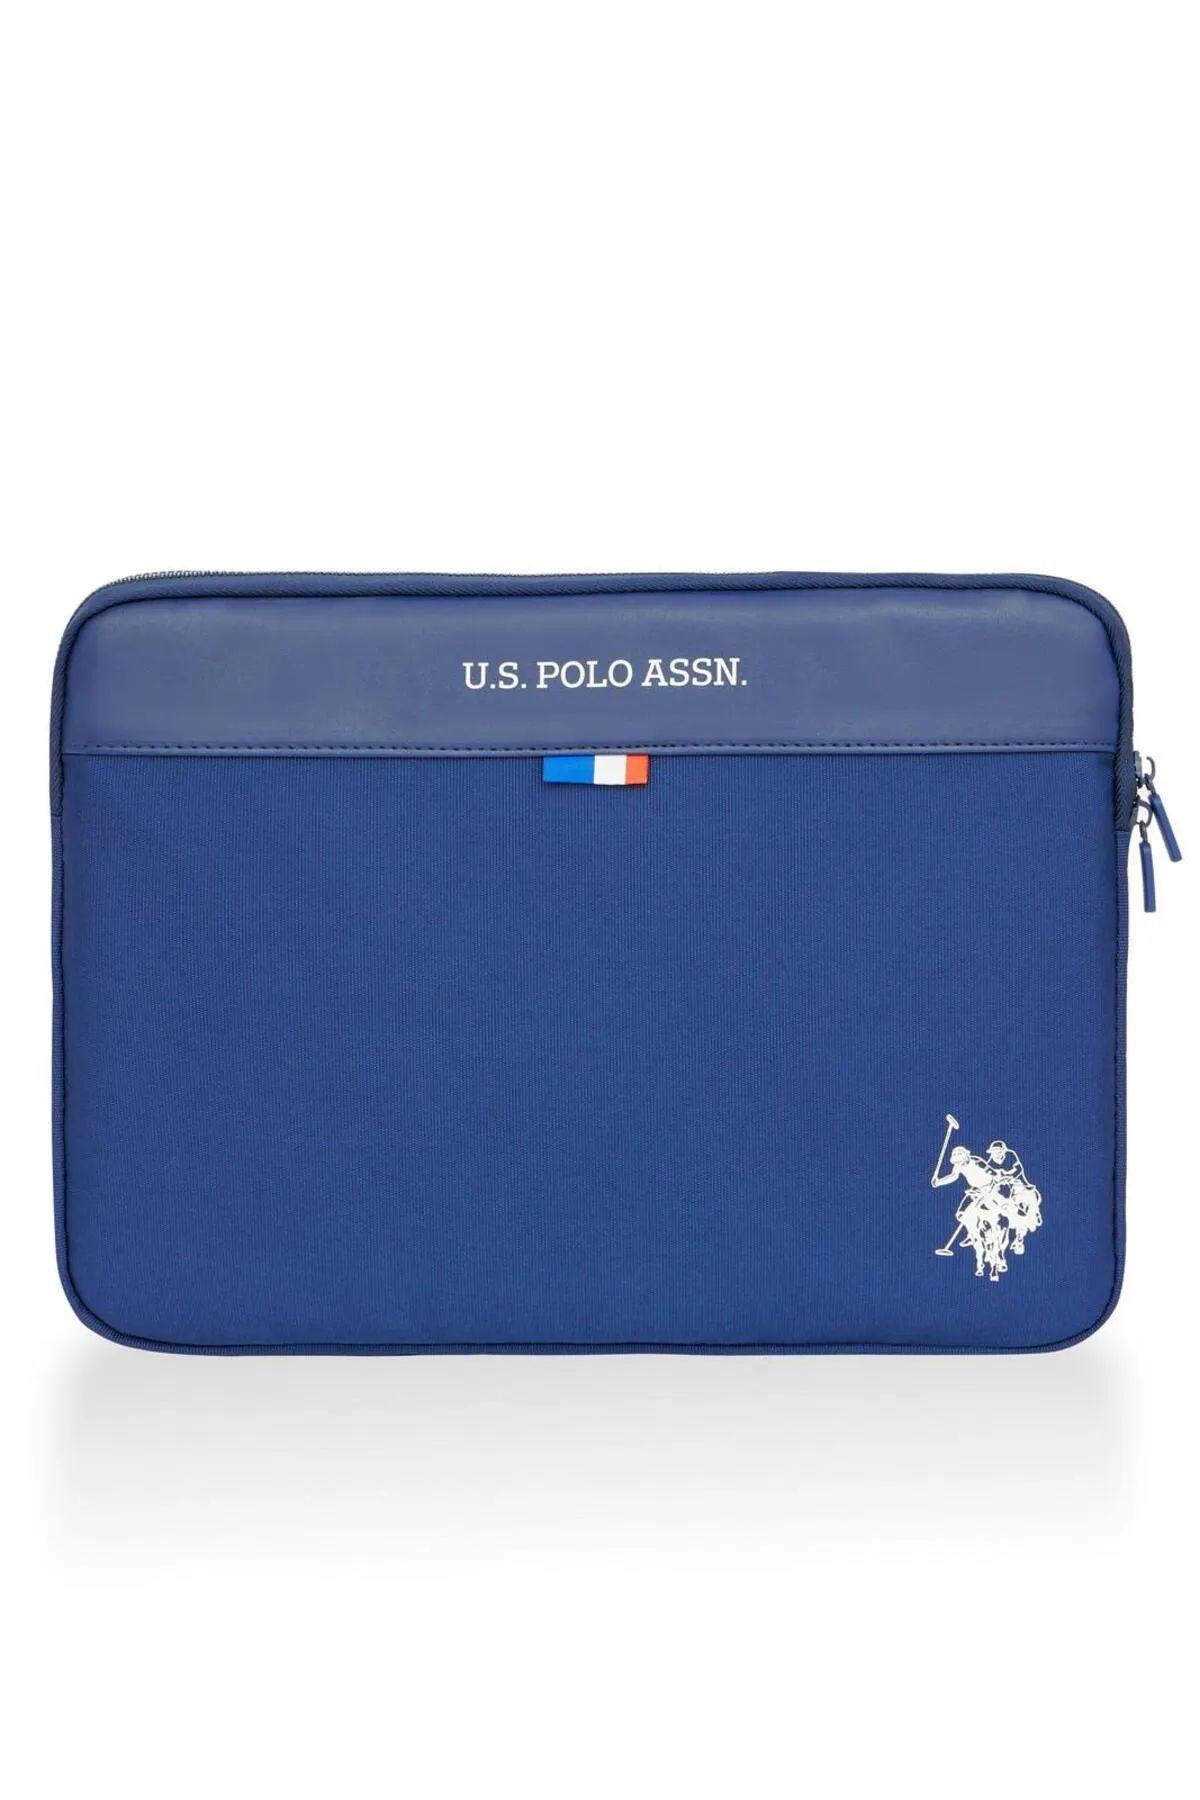 U.S. Polo Assn. U.s. Polo Assn. Macbook Air - Macbook Pro 13&13.3 İnç Uyumlu Laptop Kılıfı Lacivert PLEVR23699